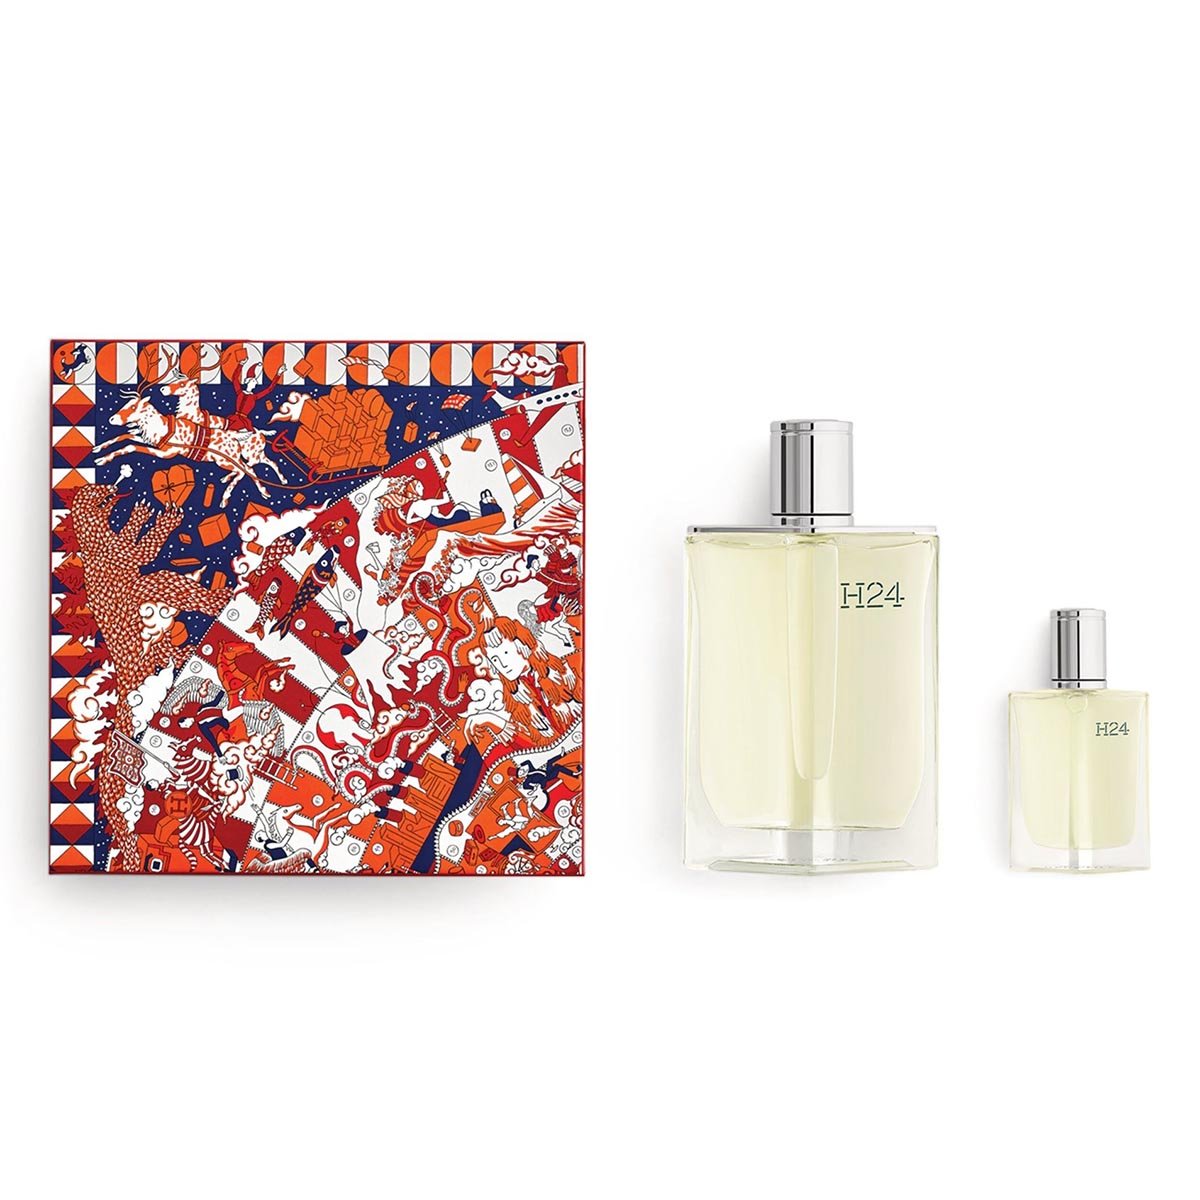 HERMÈS H24 EDT Travel Set For Men | My Perfume Shop Australia